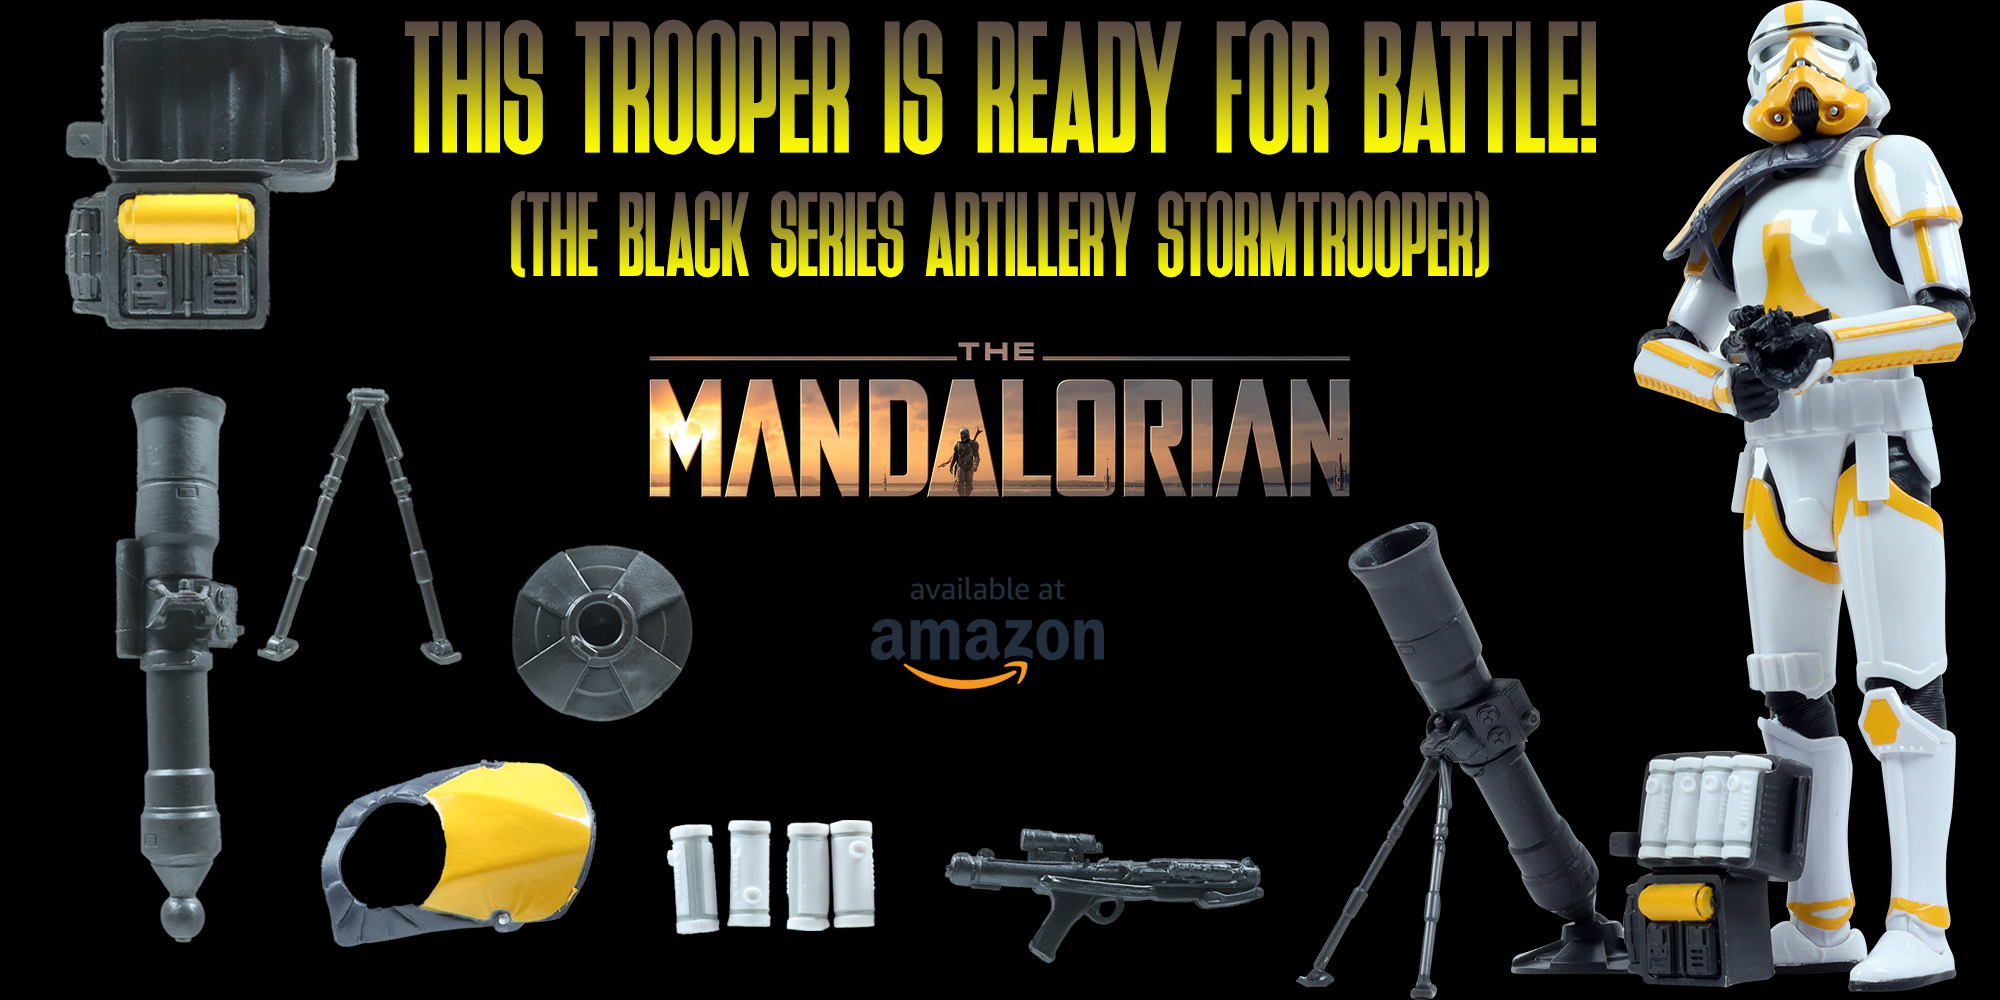 Black Series Artillery Stormtrooper